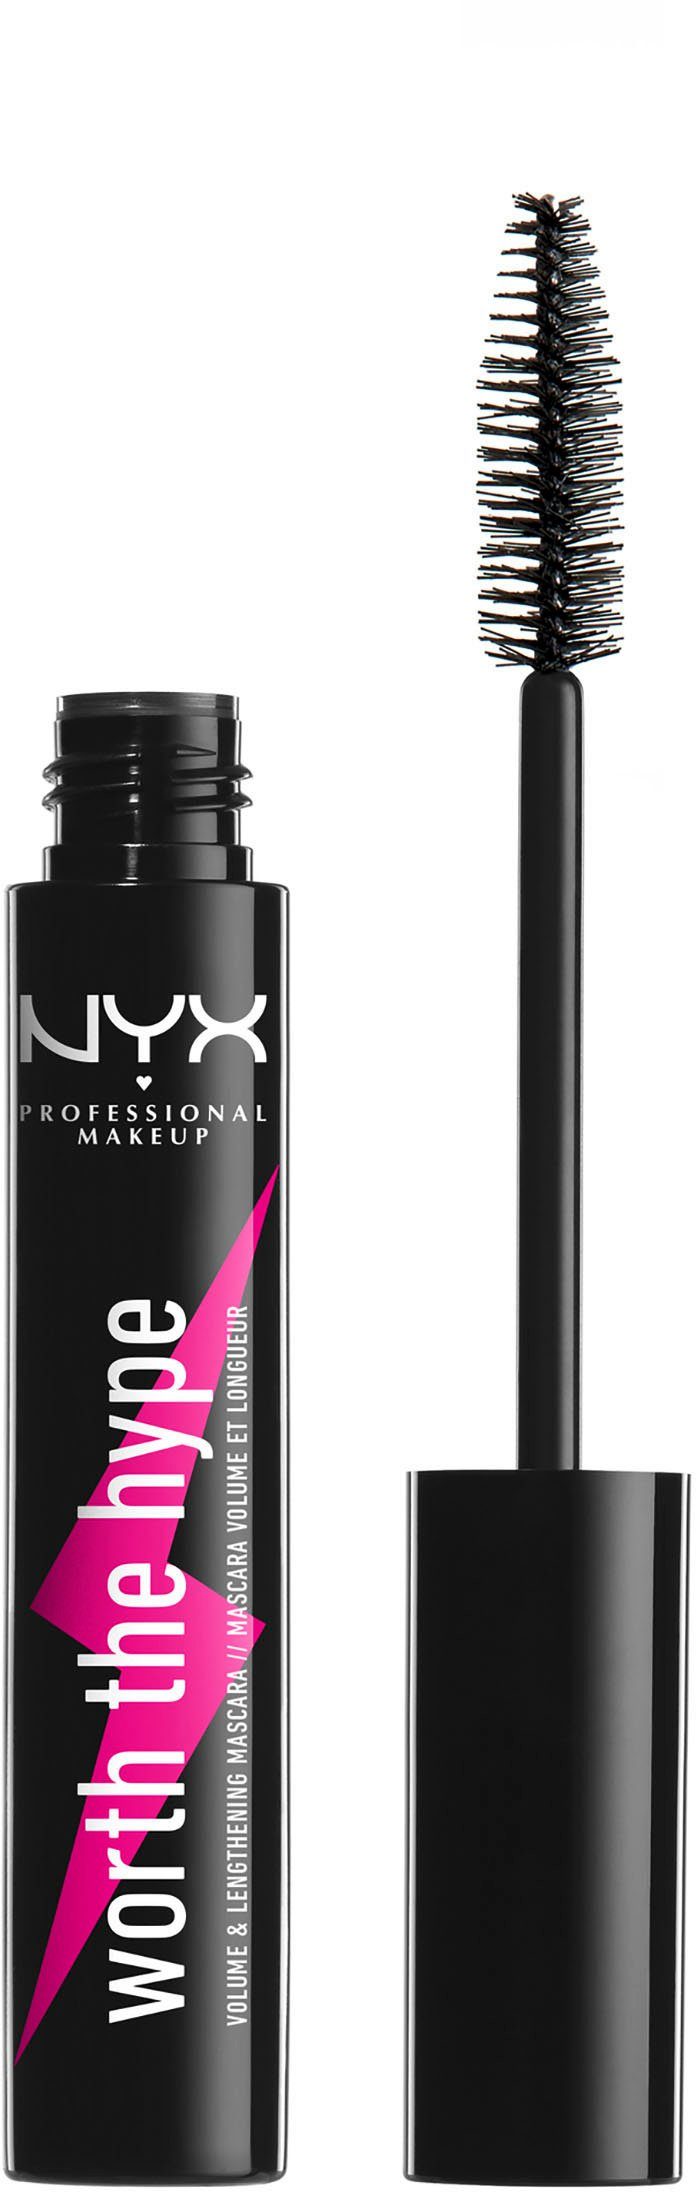 NYX Mascara Professional Makeup Worth The Hype Mascara